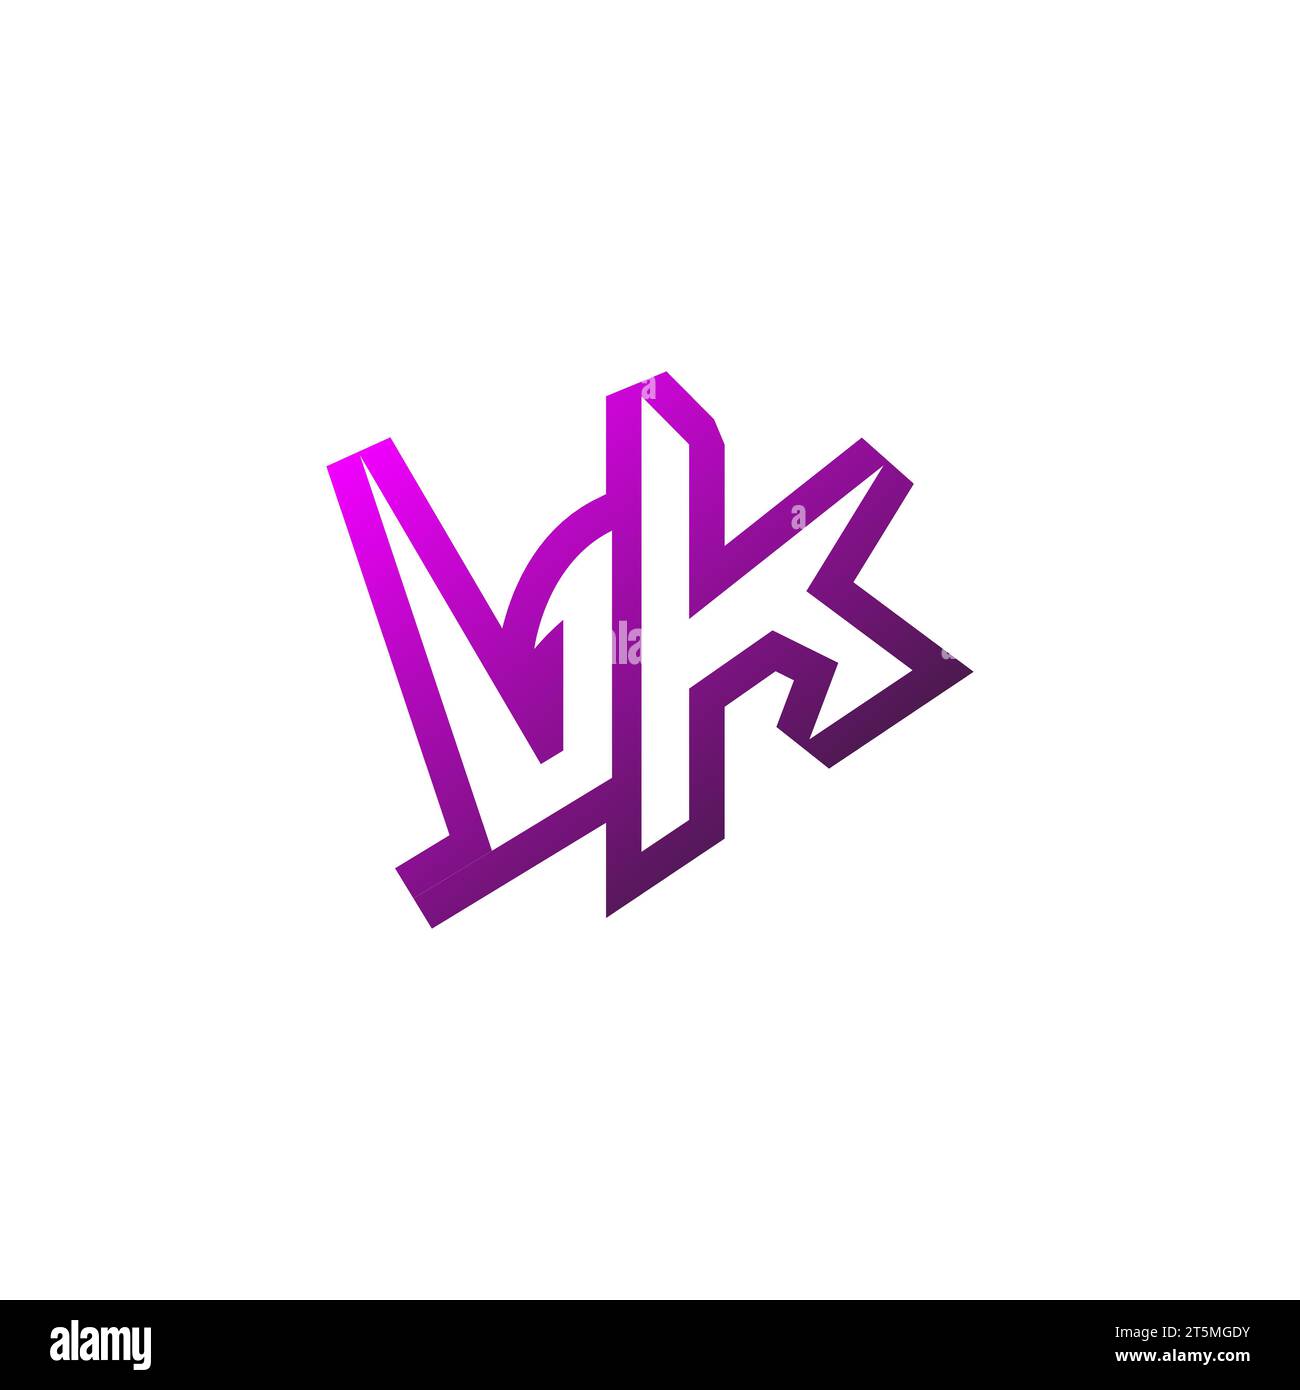 Vk initial gaming logo esports geometric designs Vector Image